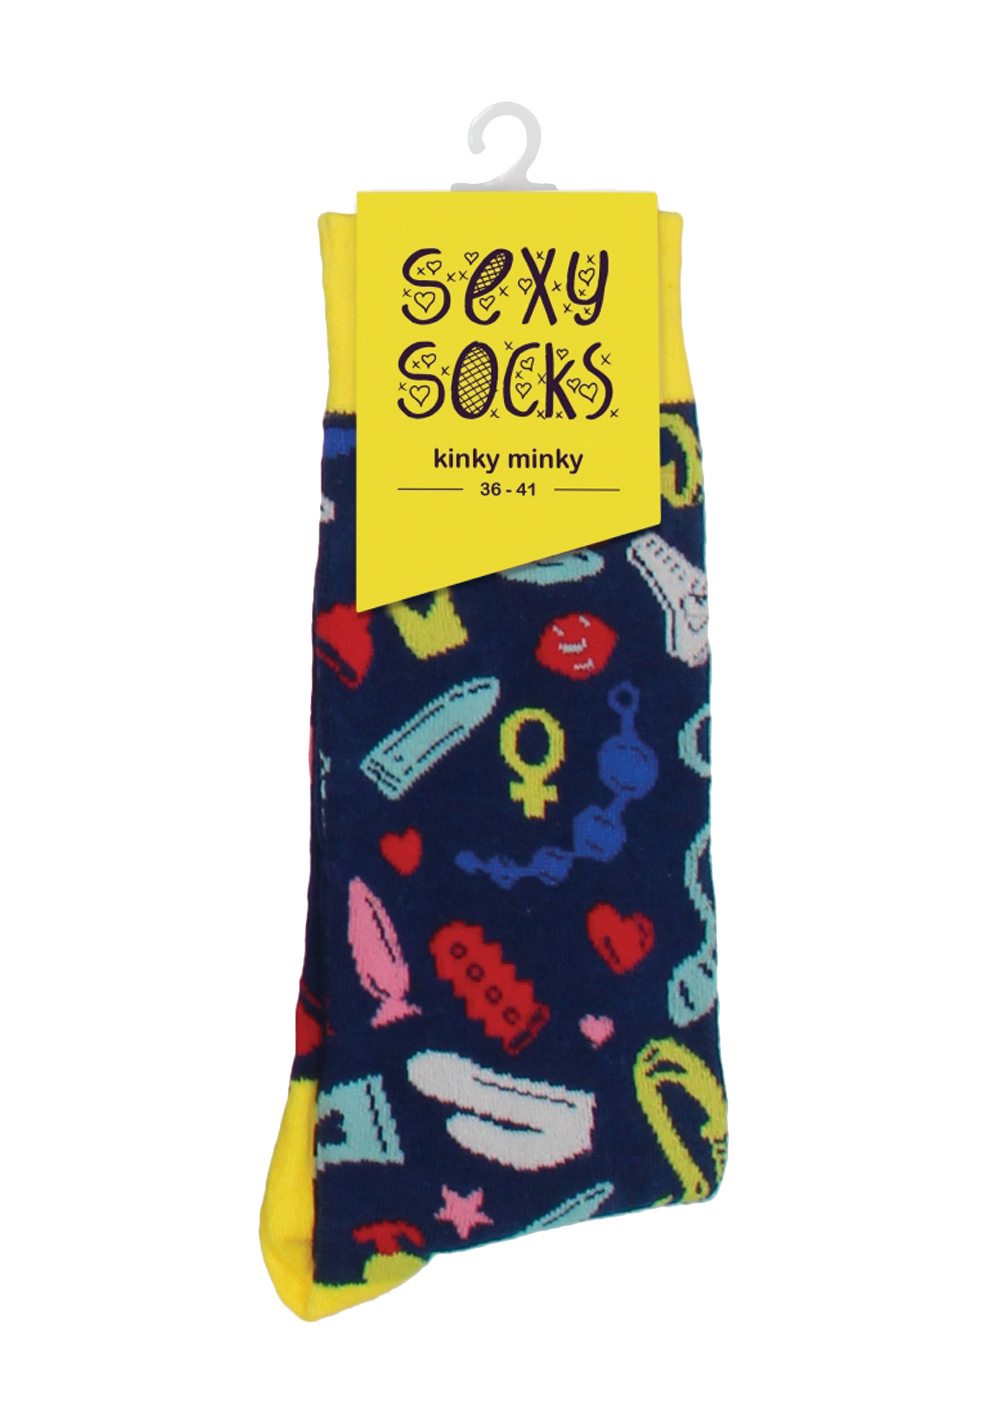 SHOTS Sexy Socks 'Kinky Minky' 36-41